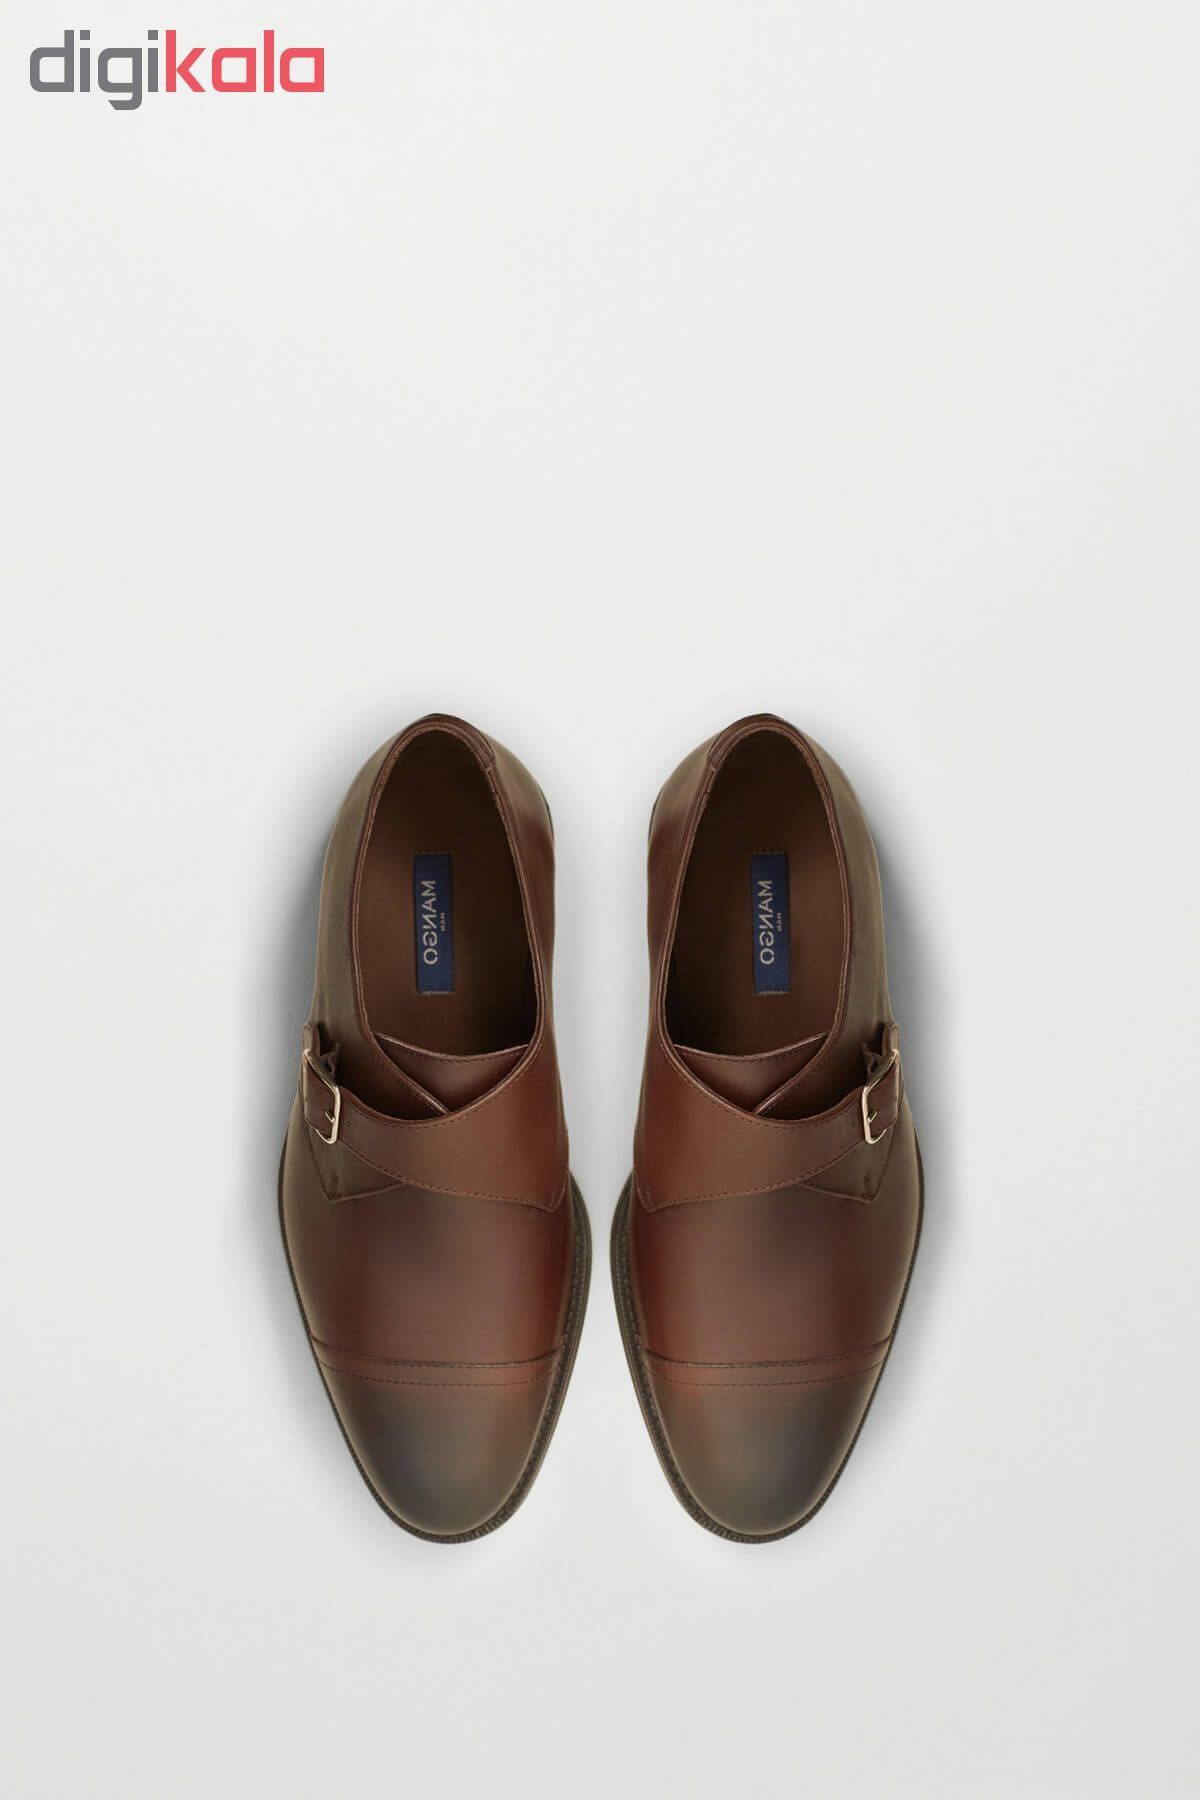 کفش مردانه  مدل Leather monk-strap -  - 3